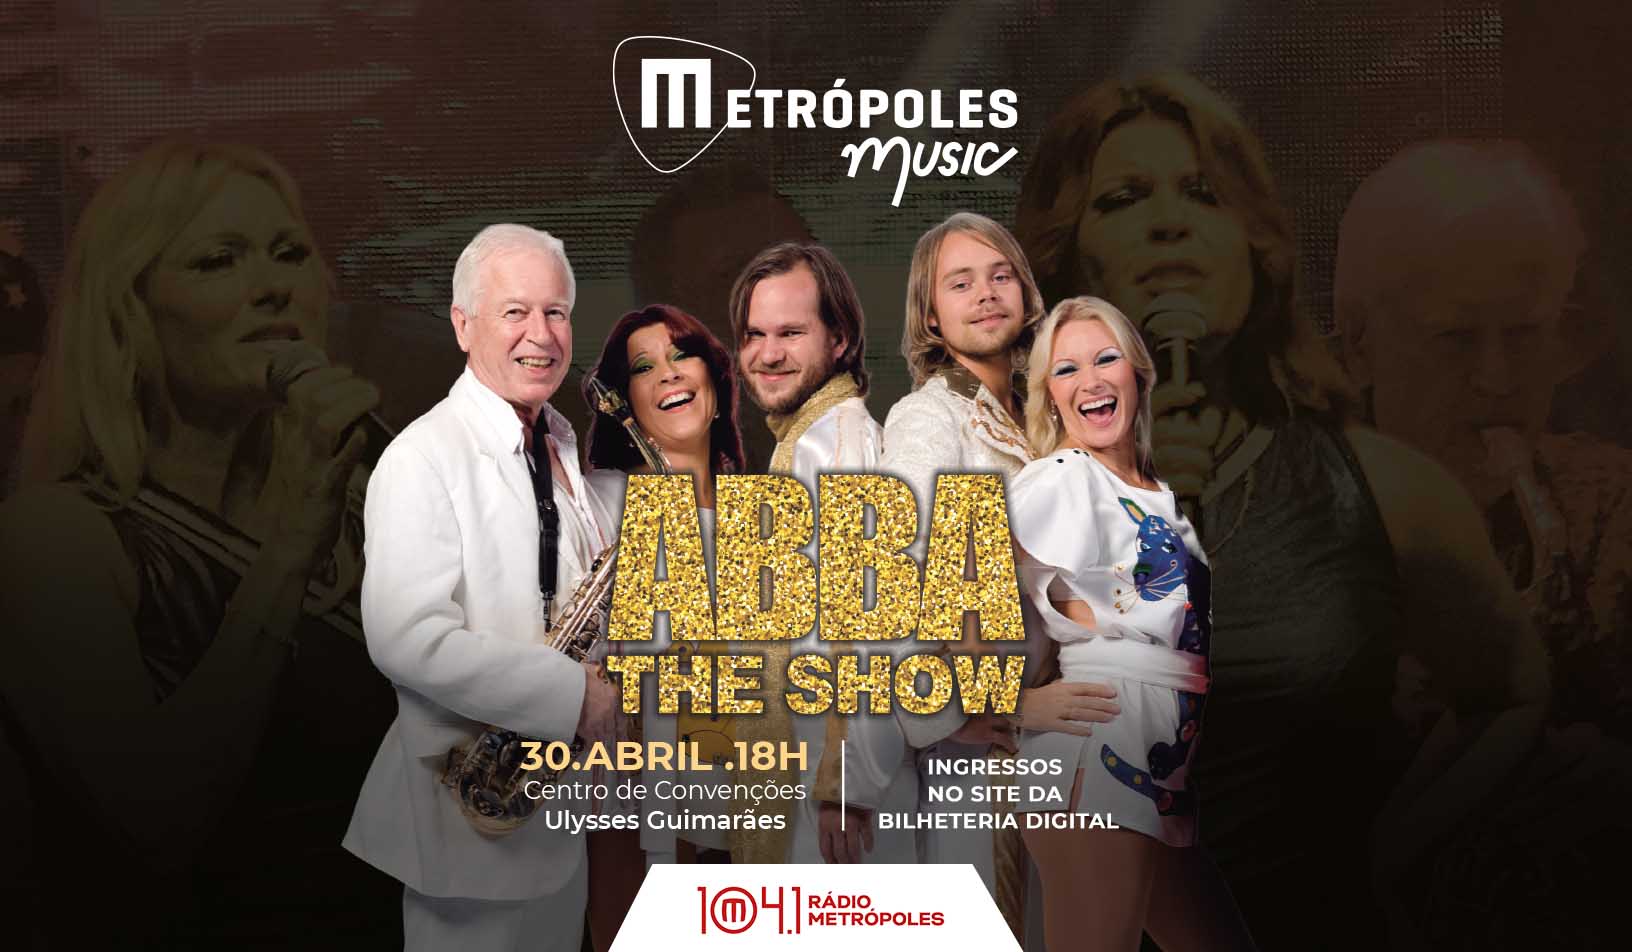 ABBA THE SHOW